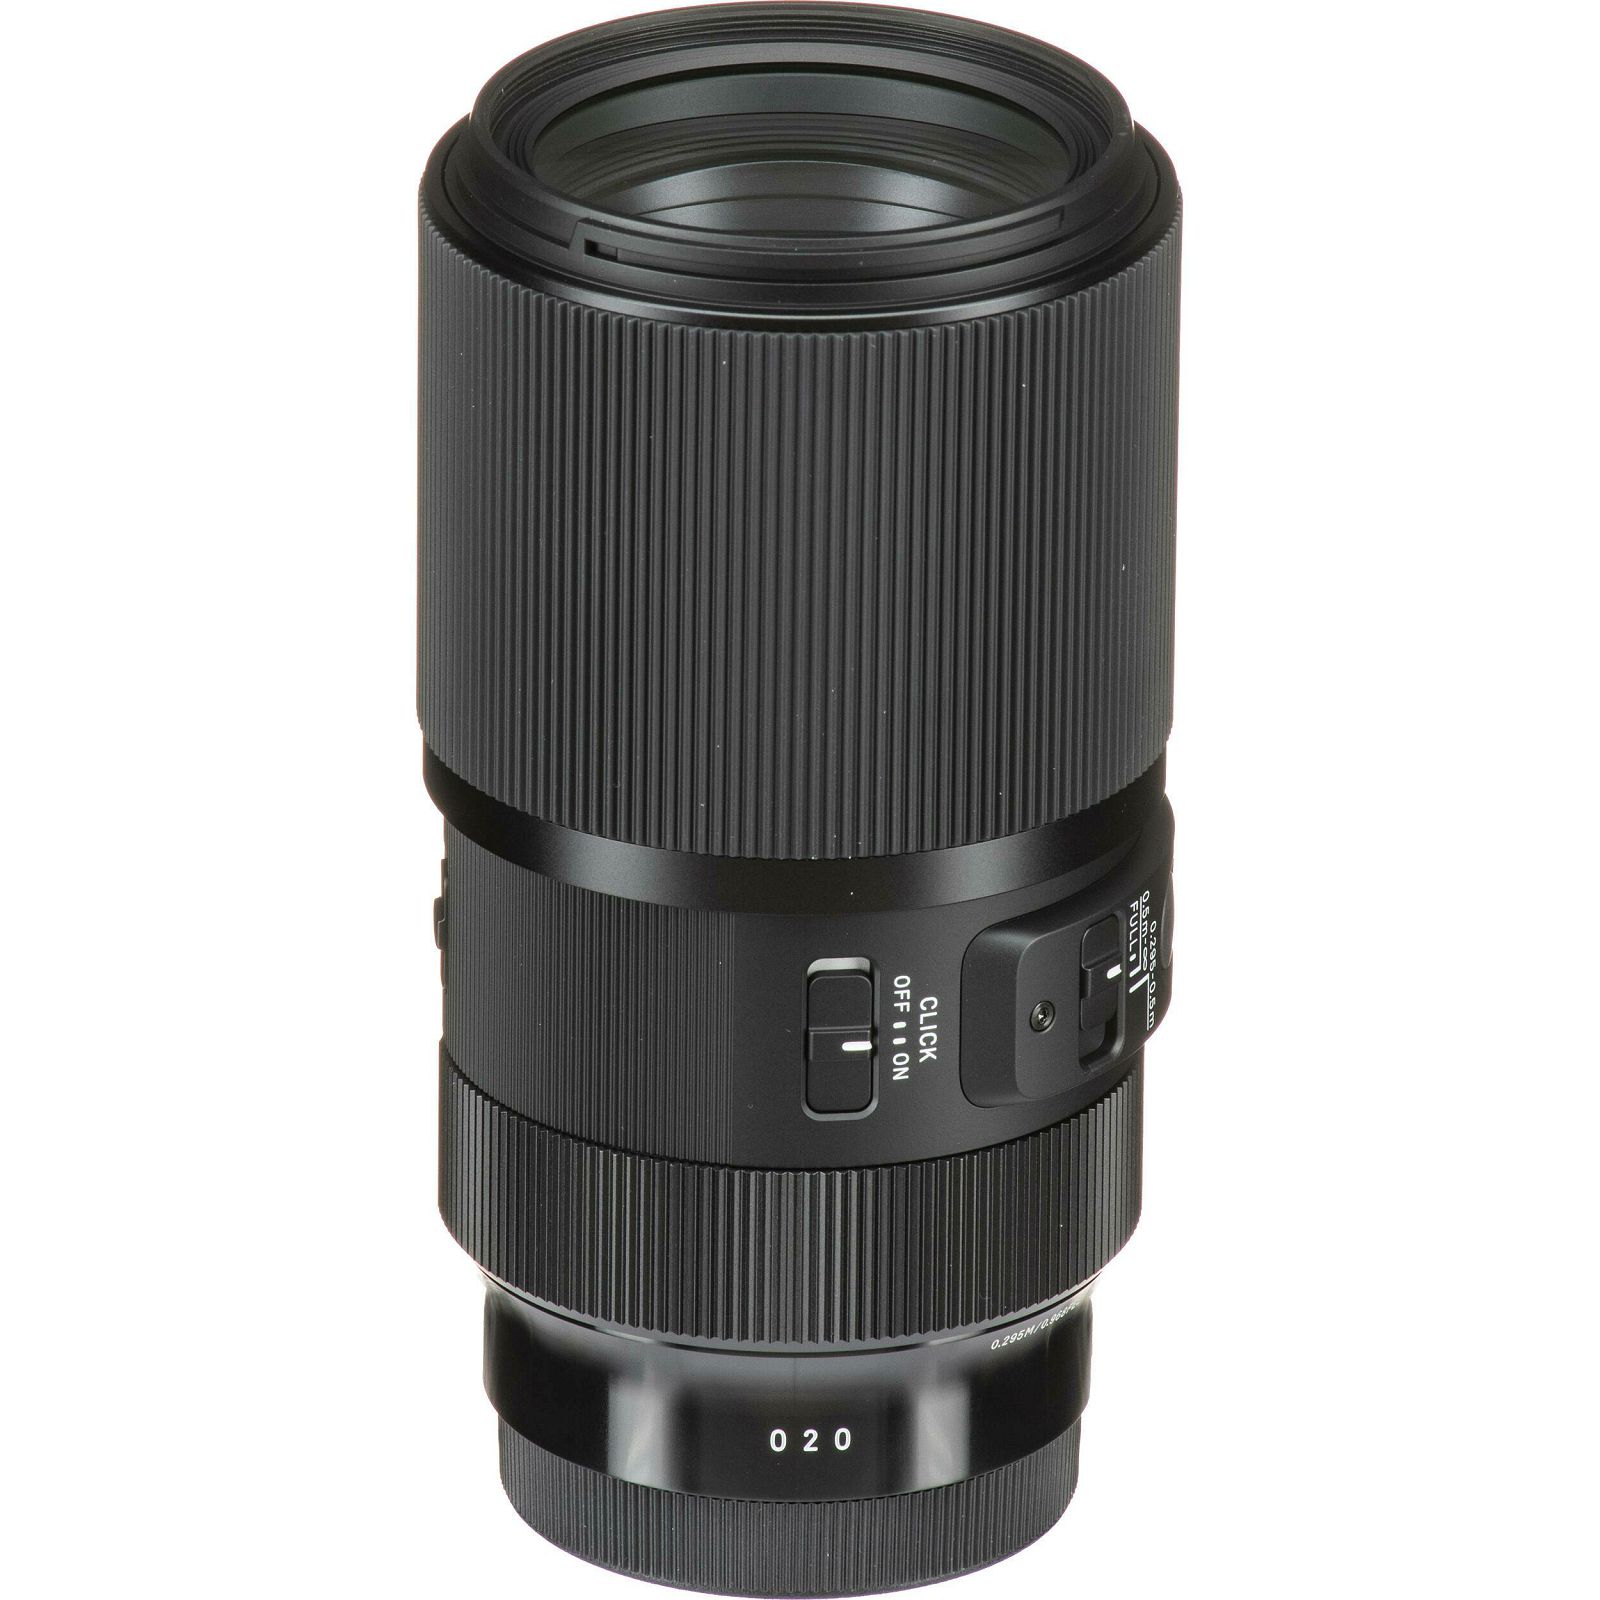 Sigma 105mm f/2.8 DG DN Macro ART objektiv za Sony FE E-mount